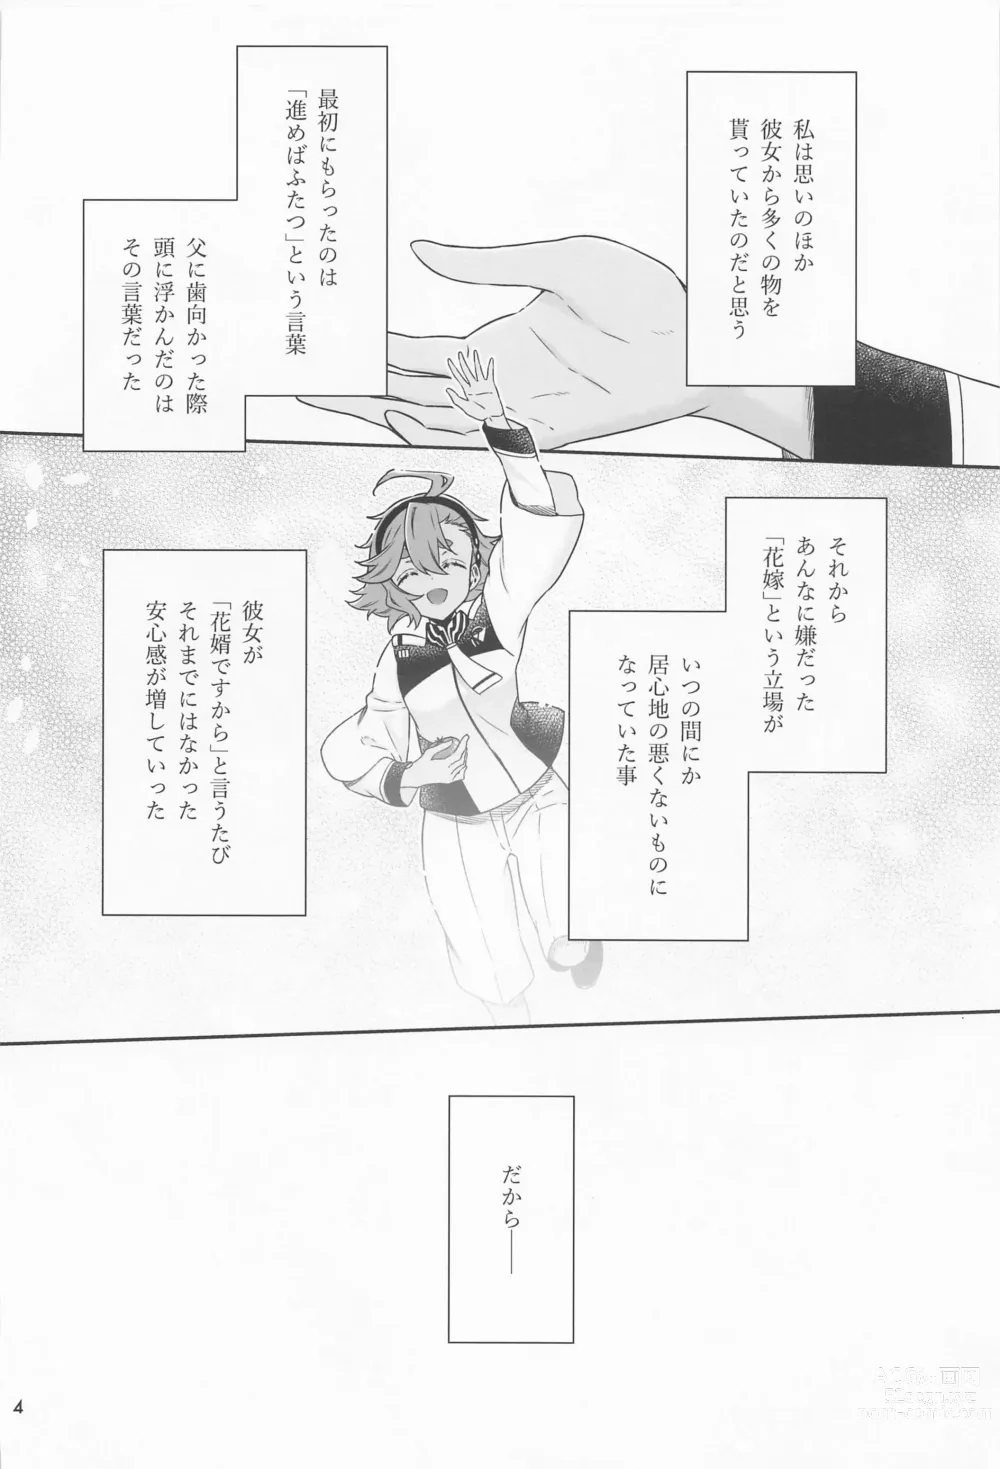 Page 3 of doujinshi Shukufuku no Hi